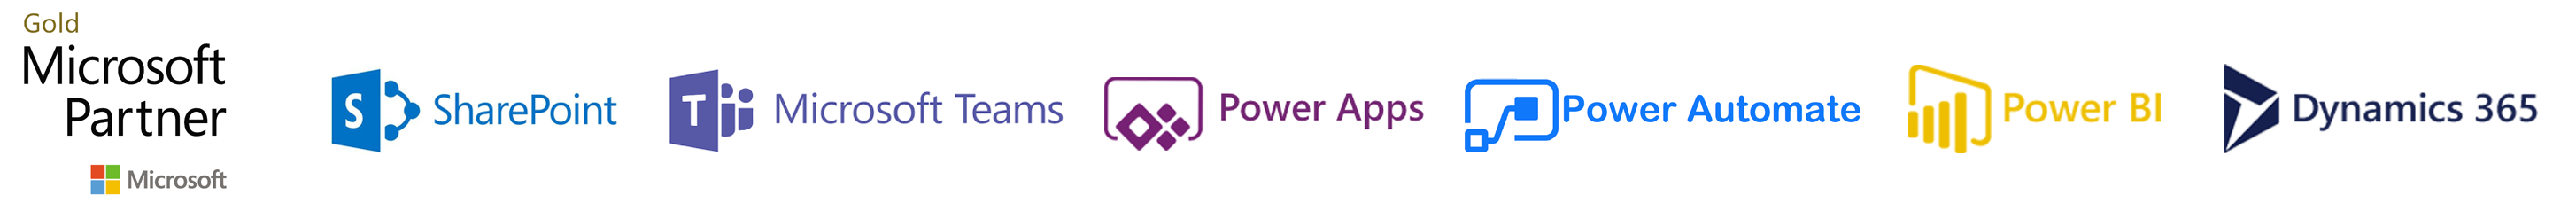 Microsoft Partner logo, SharePoint logo, Microsoft Teams logo, PowerApps logo, Flow logo, Power BI logo, Dynamics 365 logo